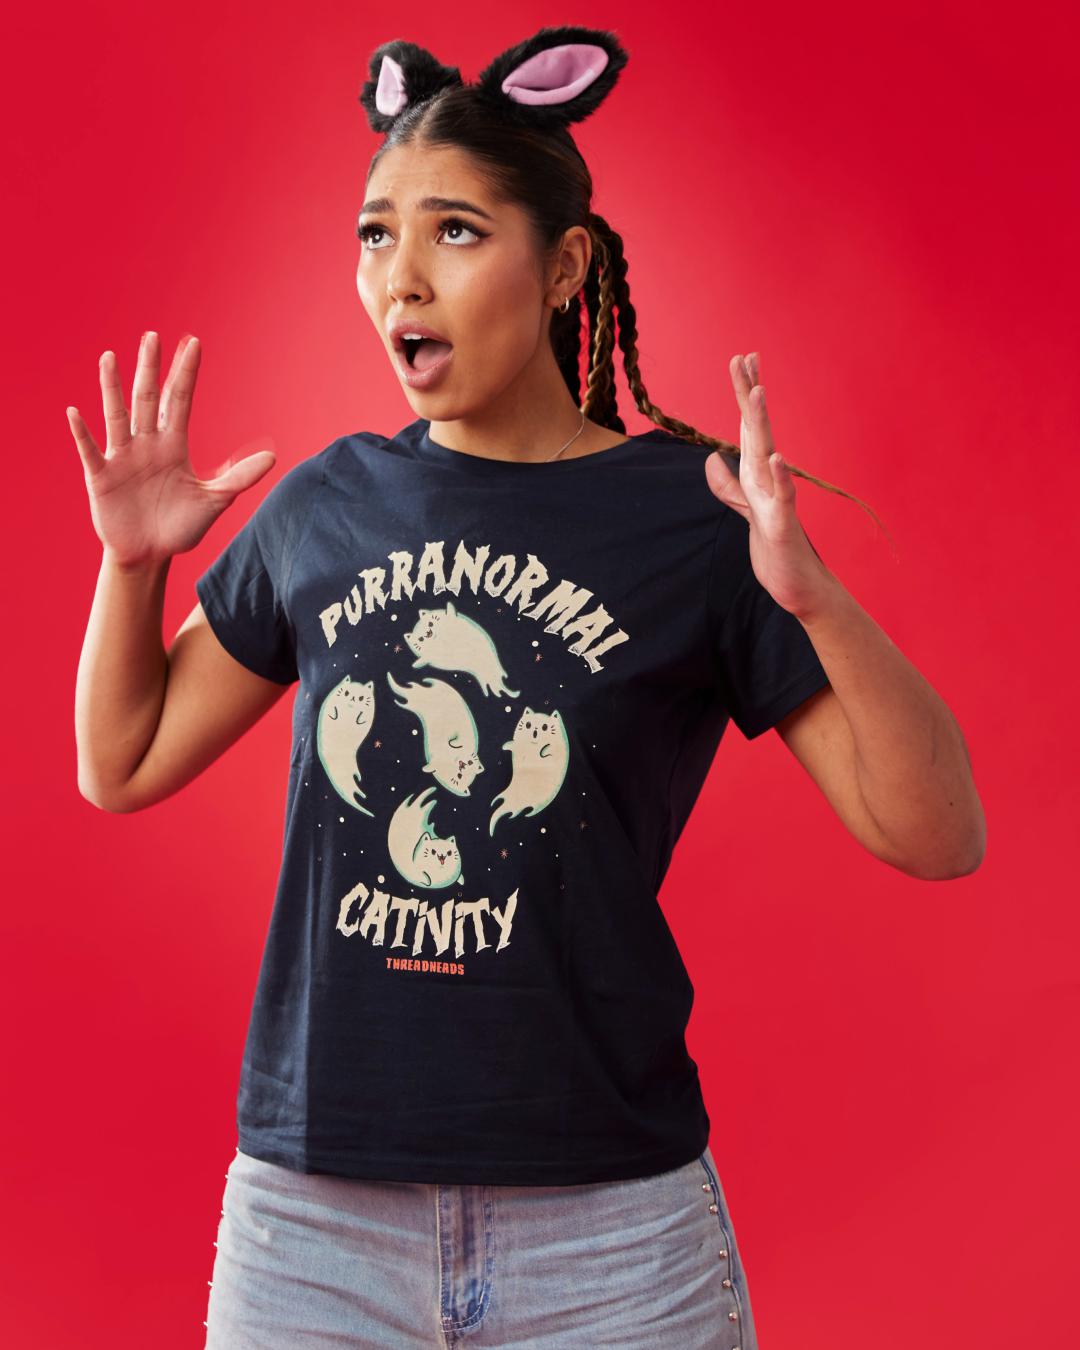 Purranormal Cativity T-Shirt Australia Online